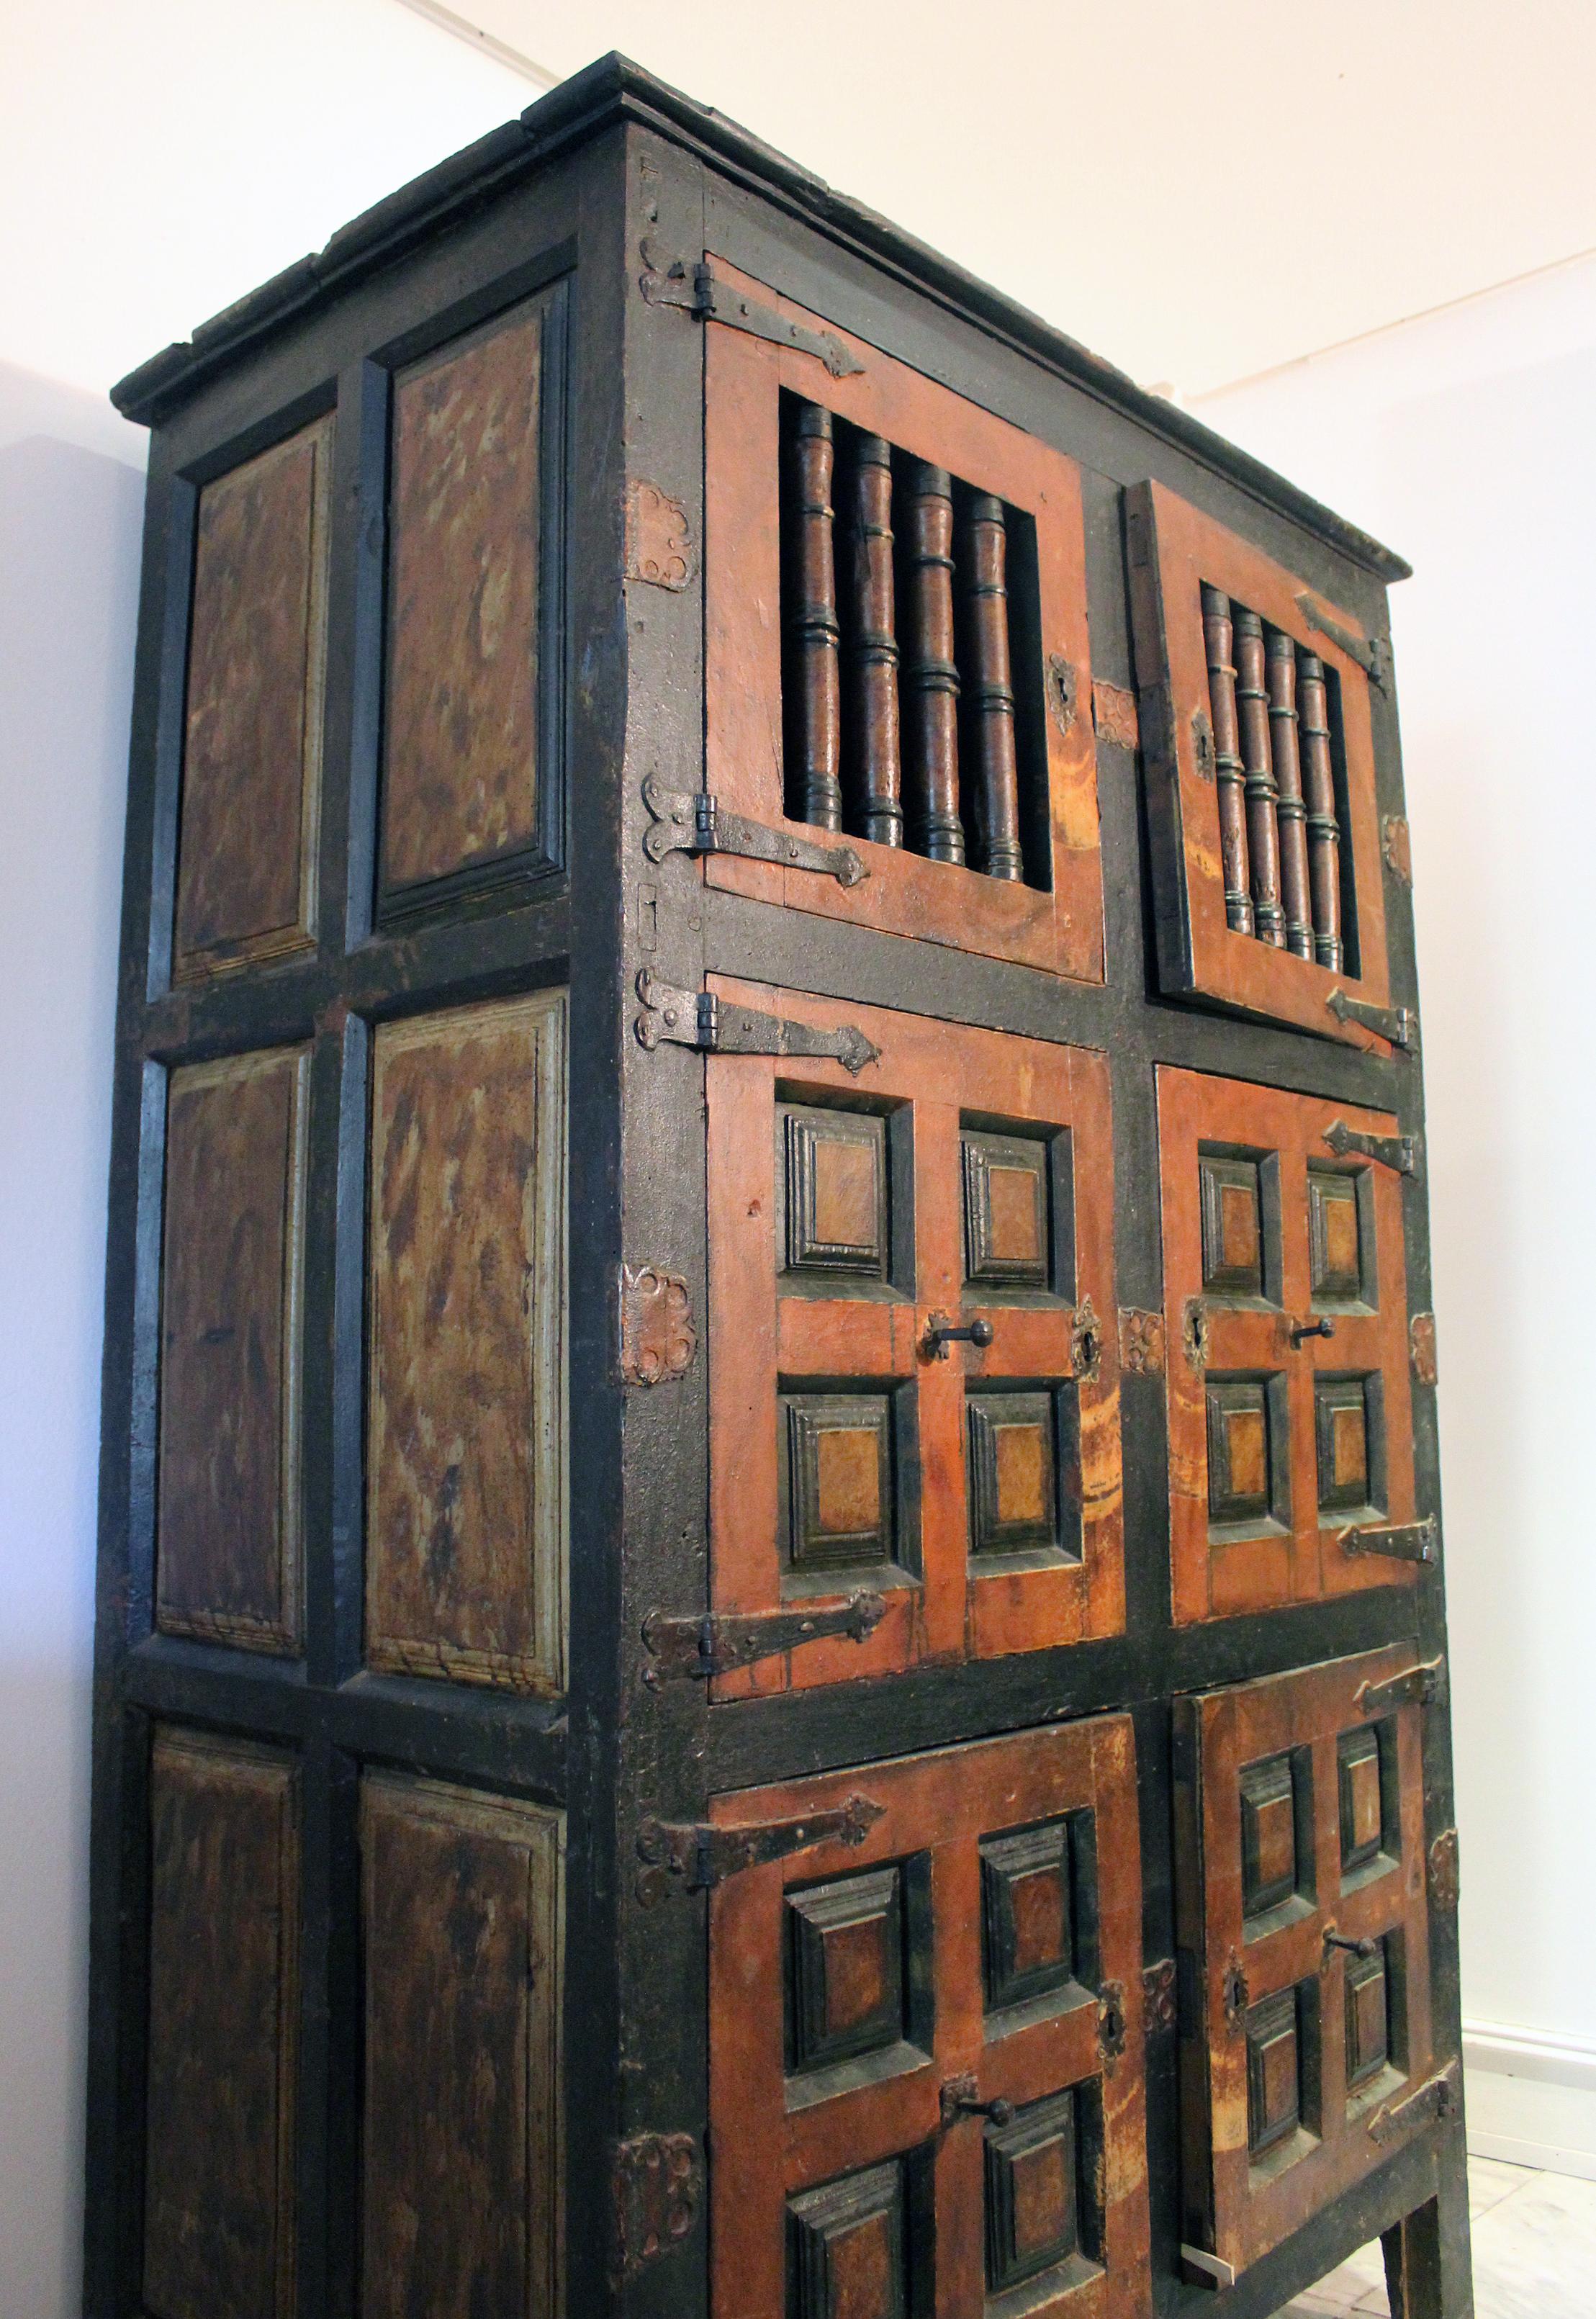 17th Century Spanish Painted Cabinet with Original Doors, Locks and Fittings (Handbemalt)